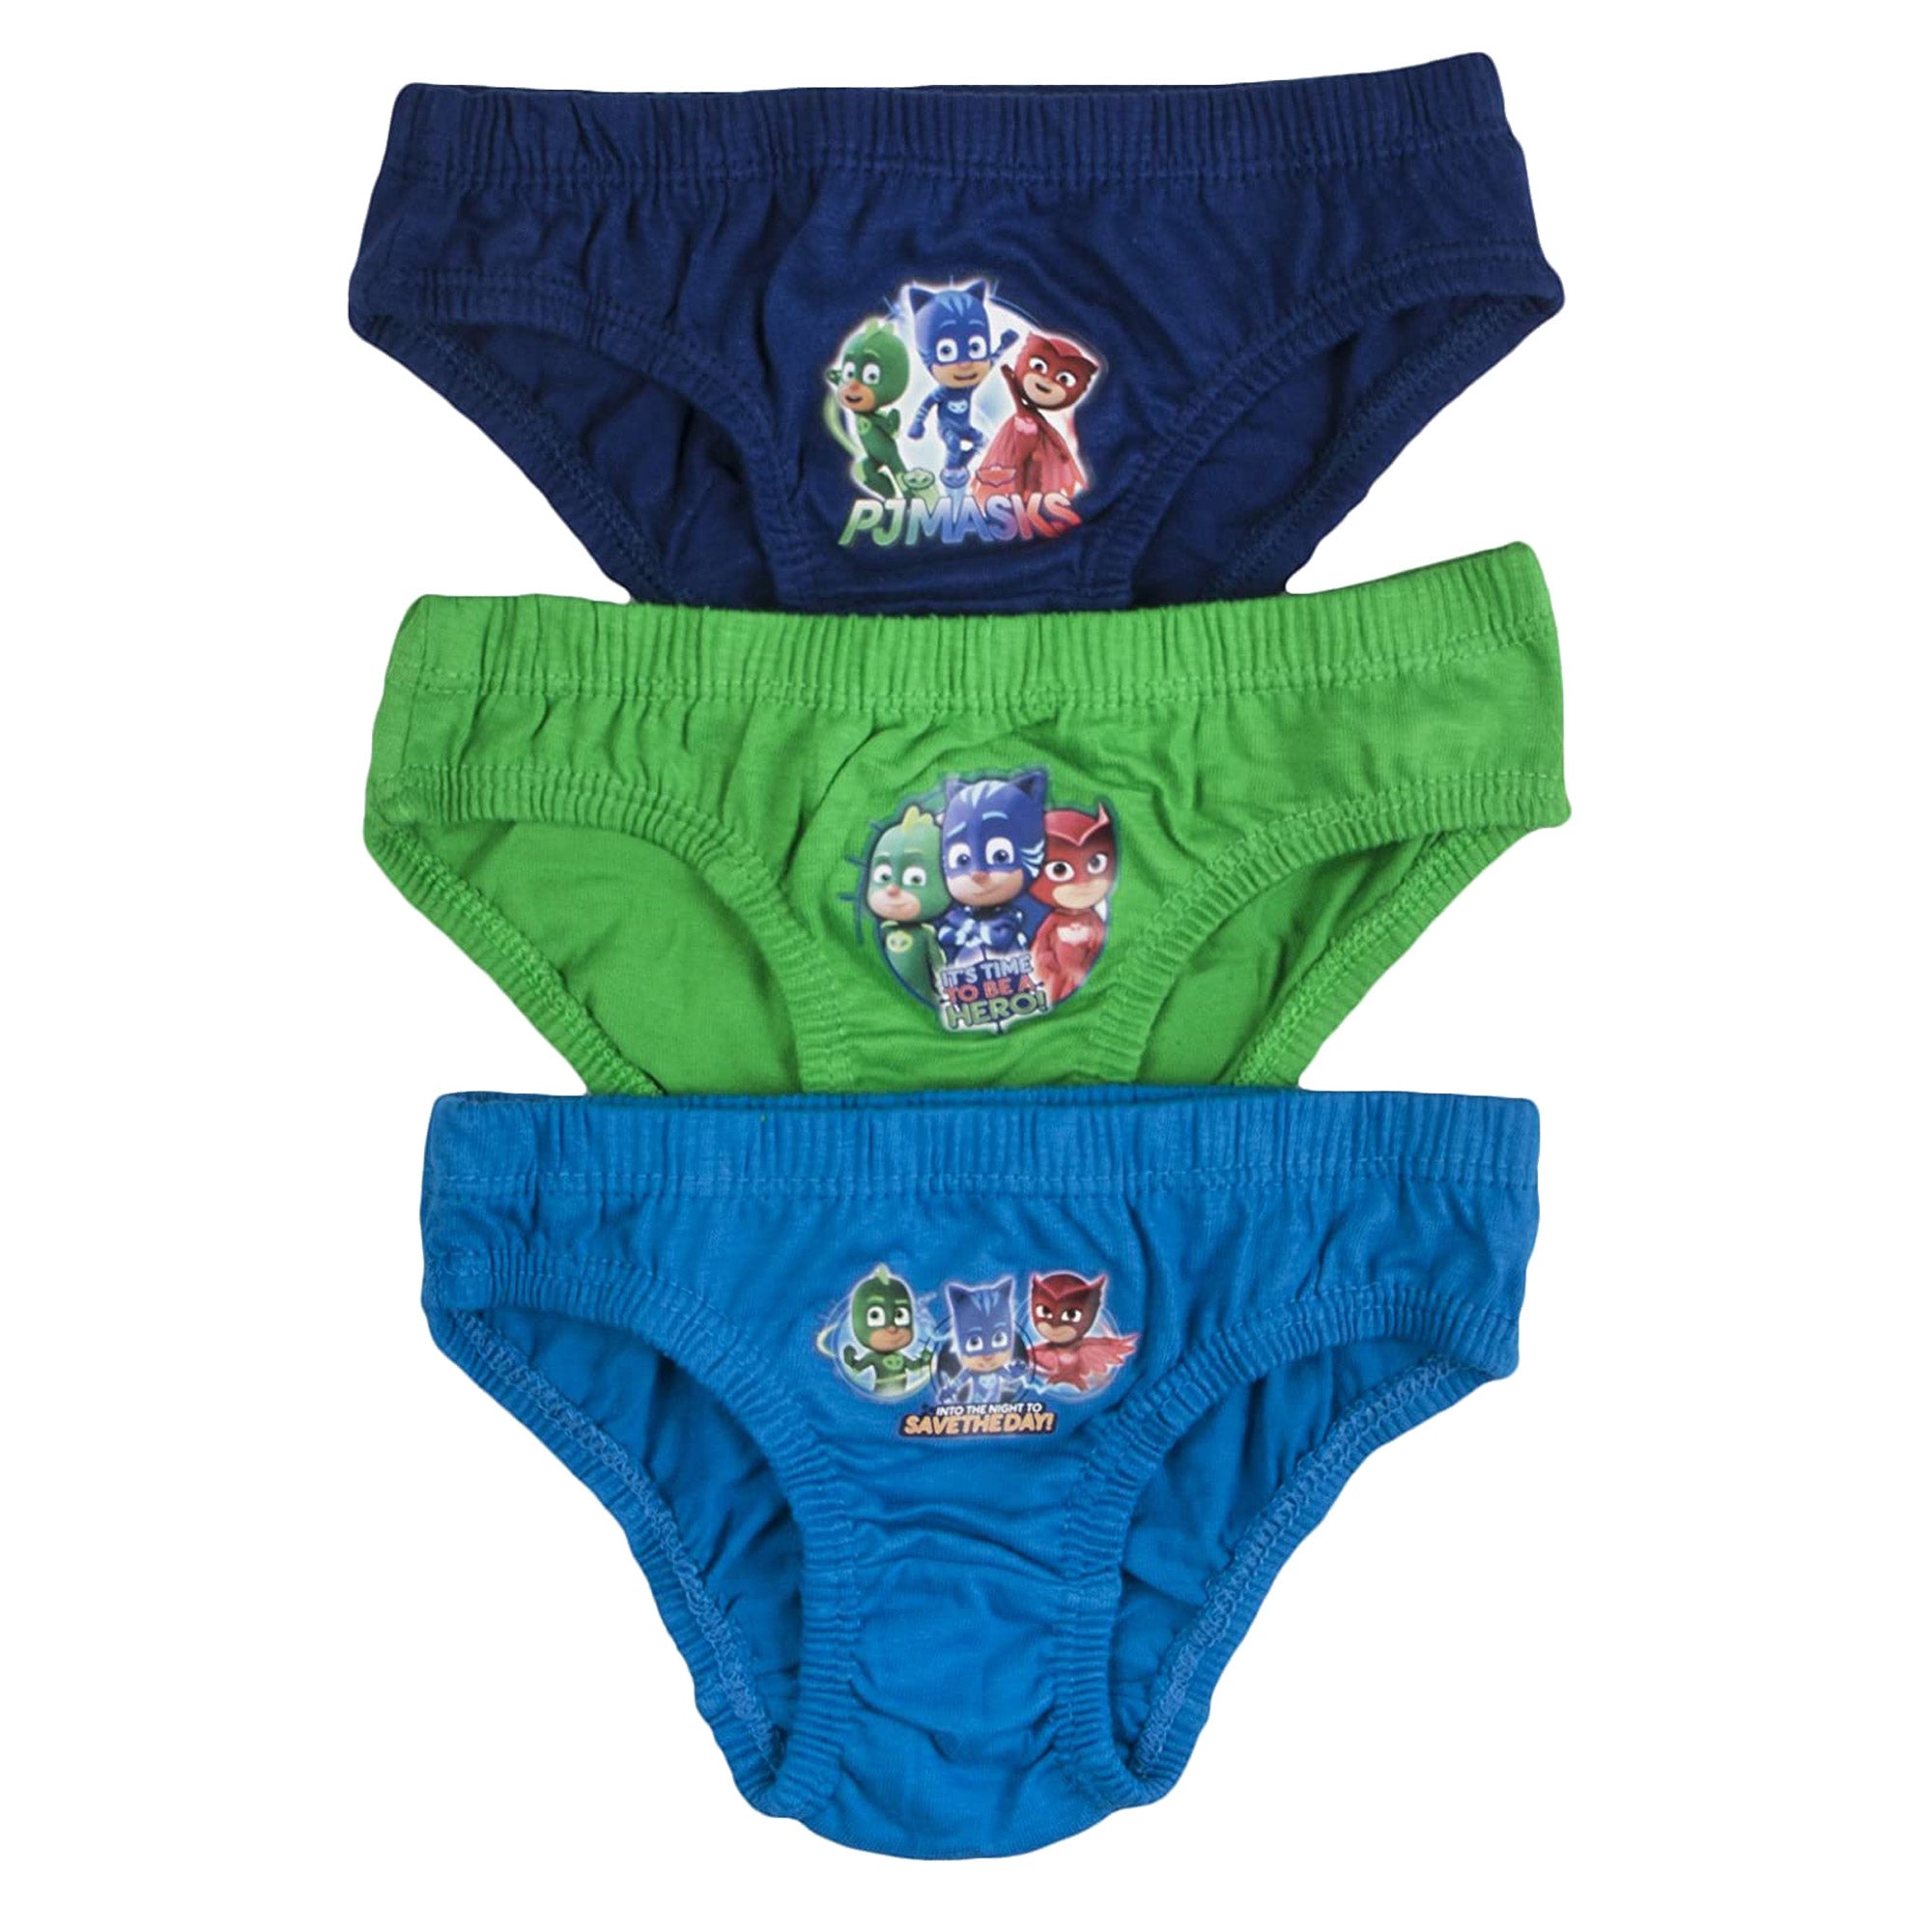 PJ Masks Kids Underwear Briefs Pants Green 3 Pack